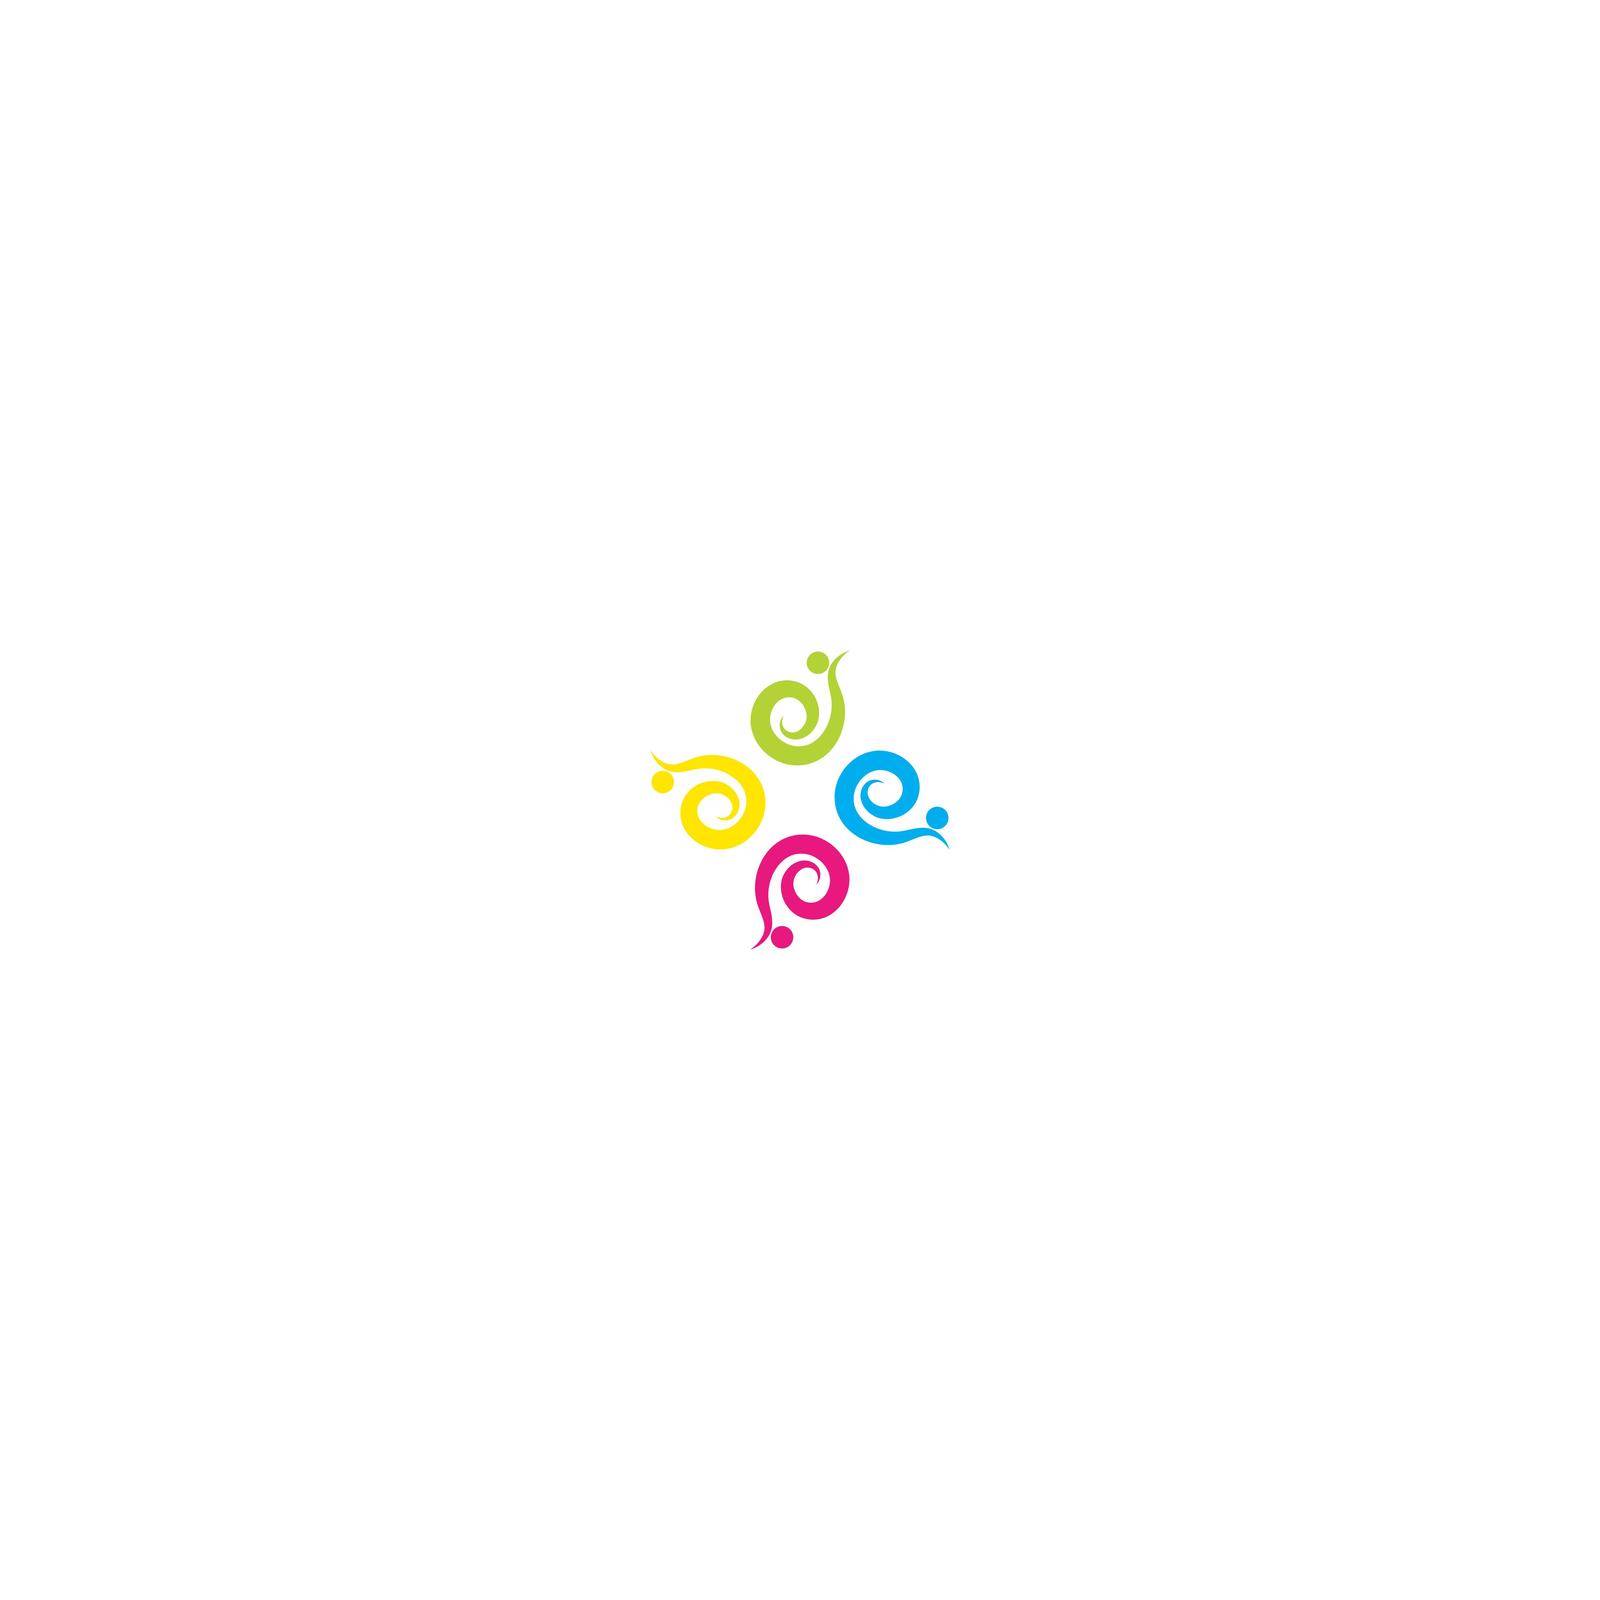 Community group, People group, Care logo icon illustration